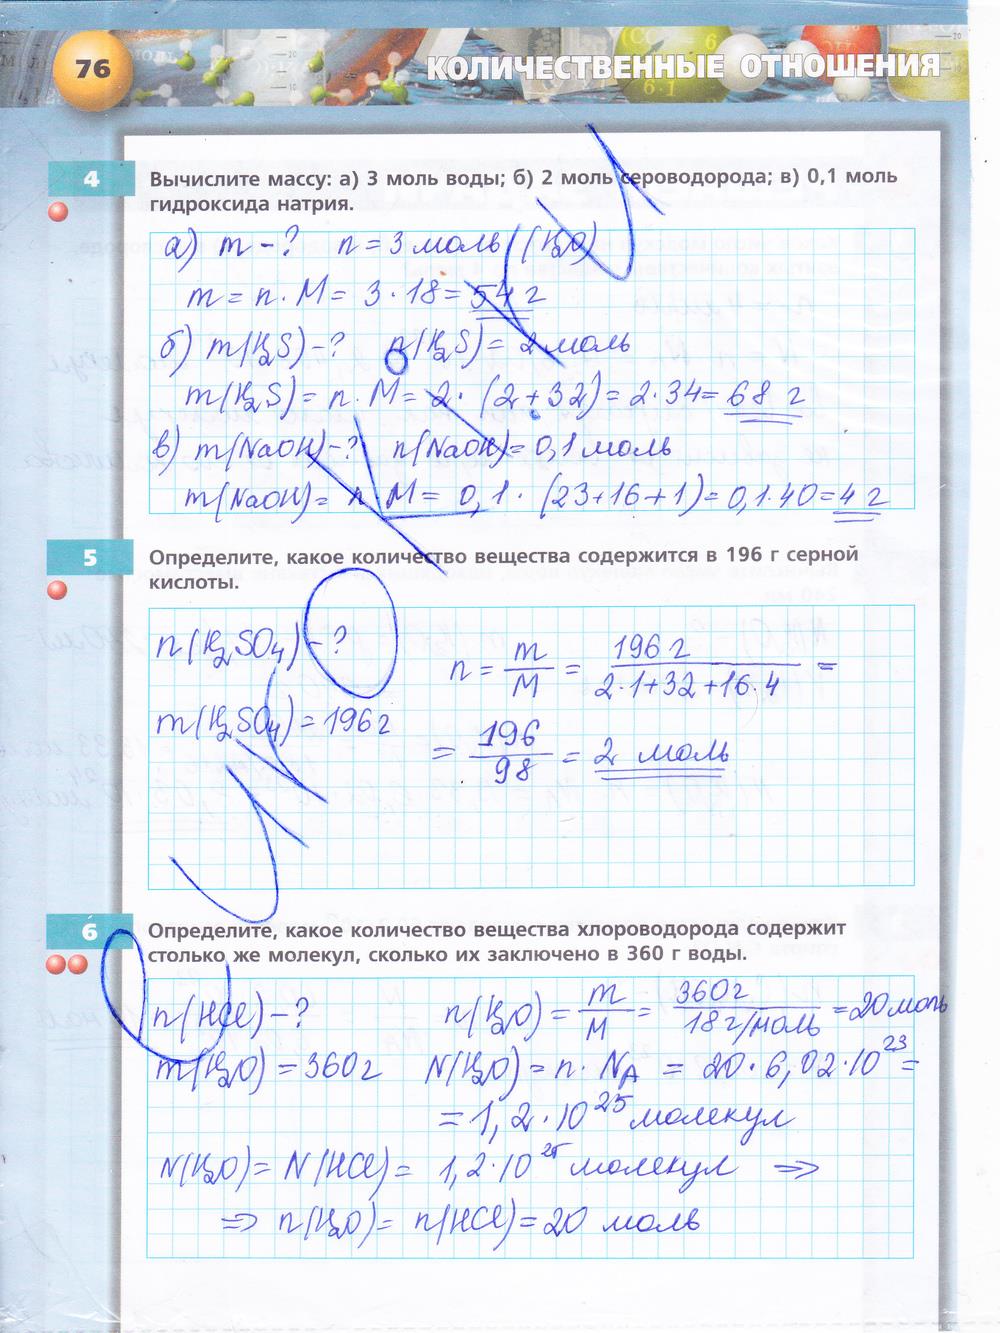 гдз 8 класс тетрадь-тренажёр страница 76 химия Гара